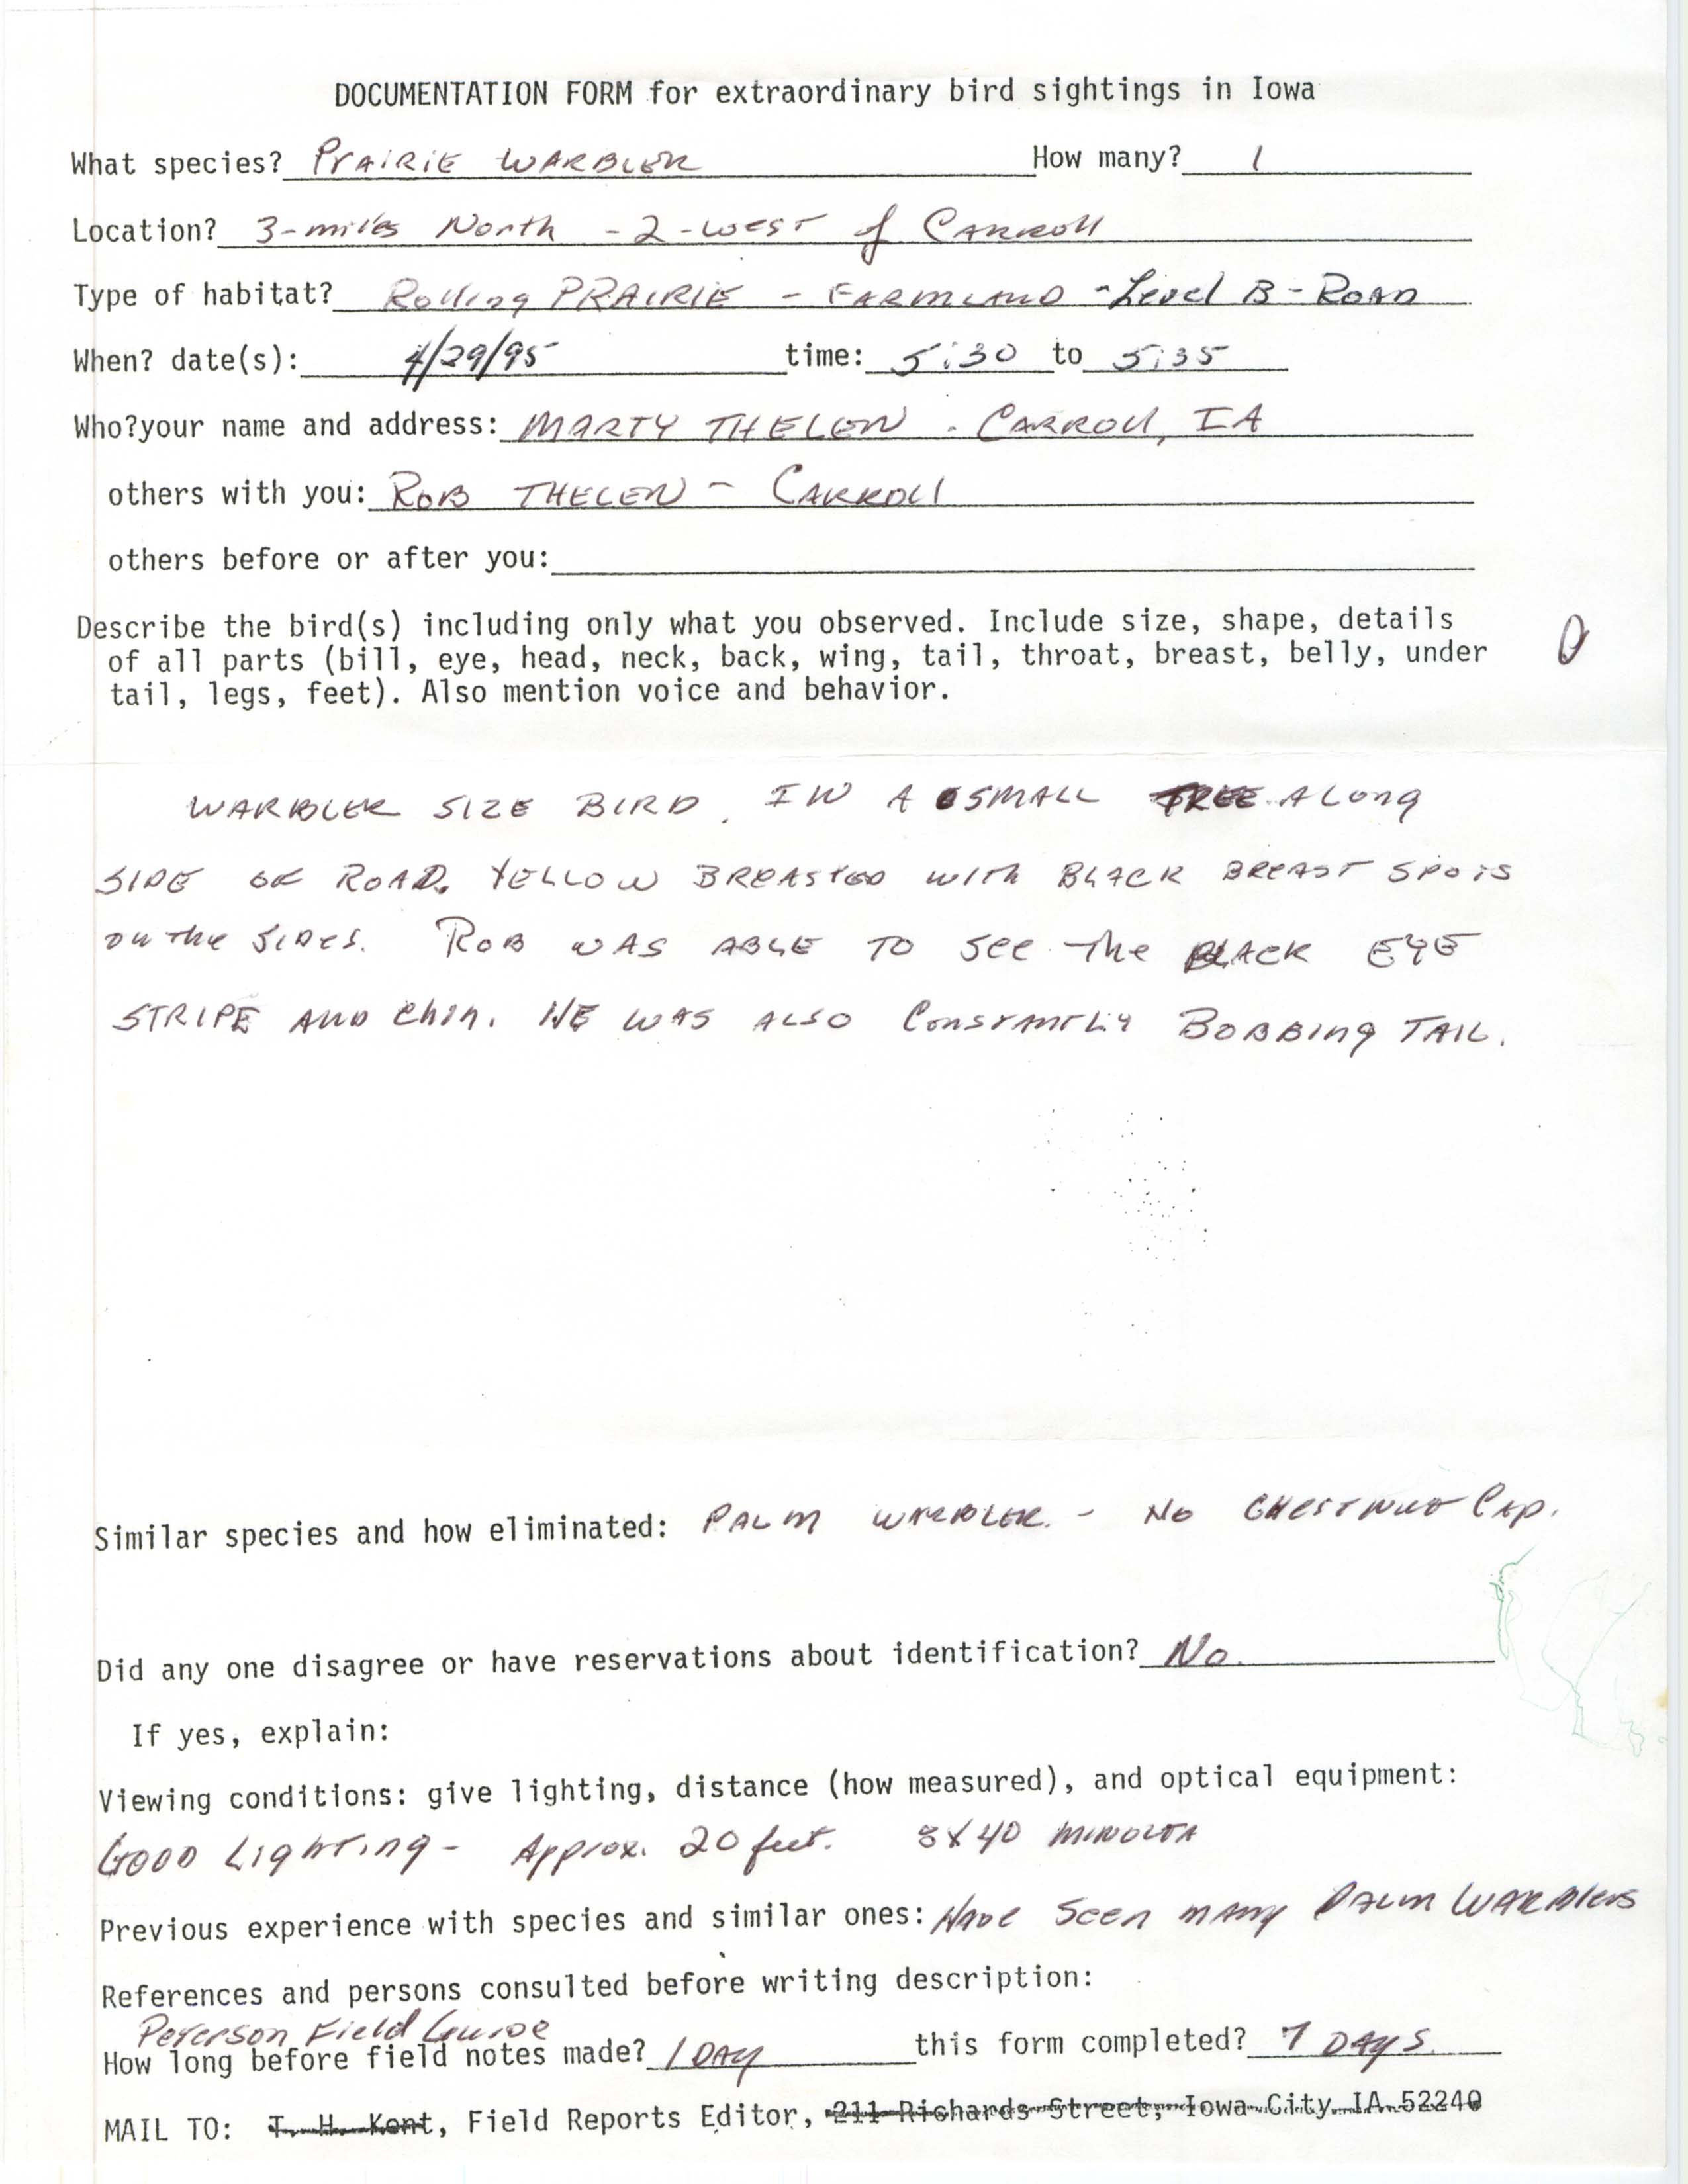 Rare bird documentation form for Prairie Warbler northwest of Carroll, 1995